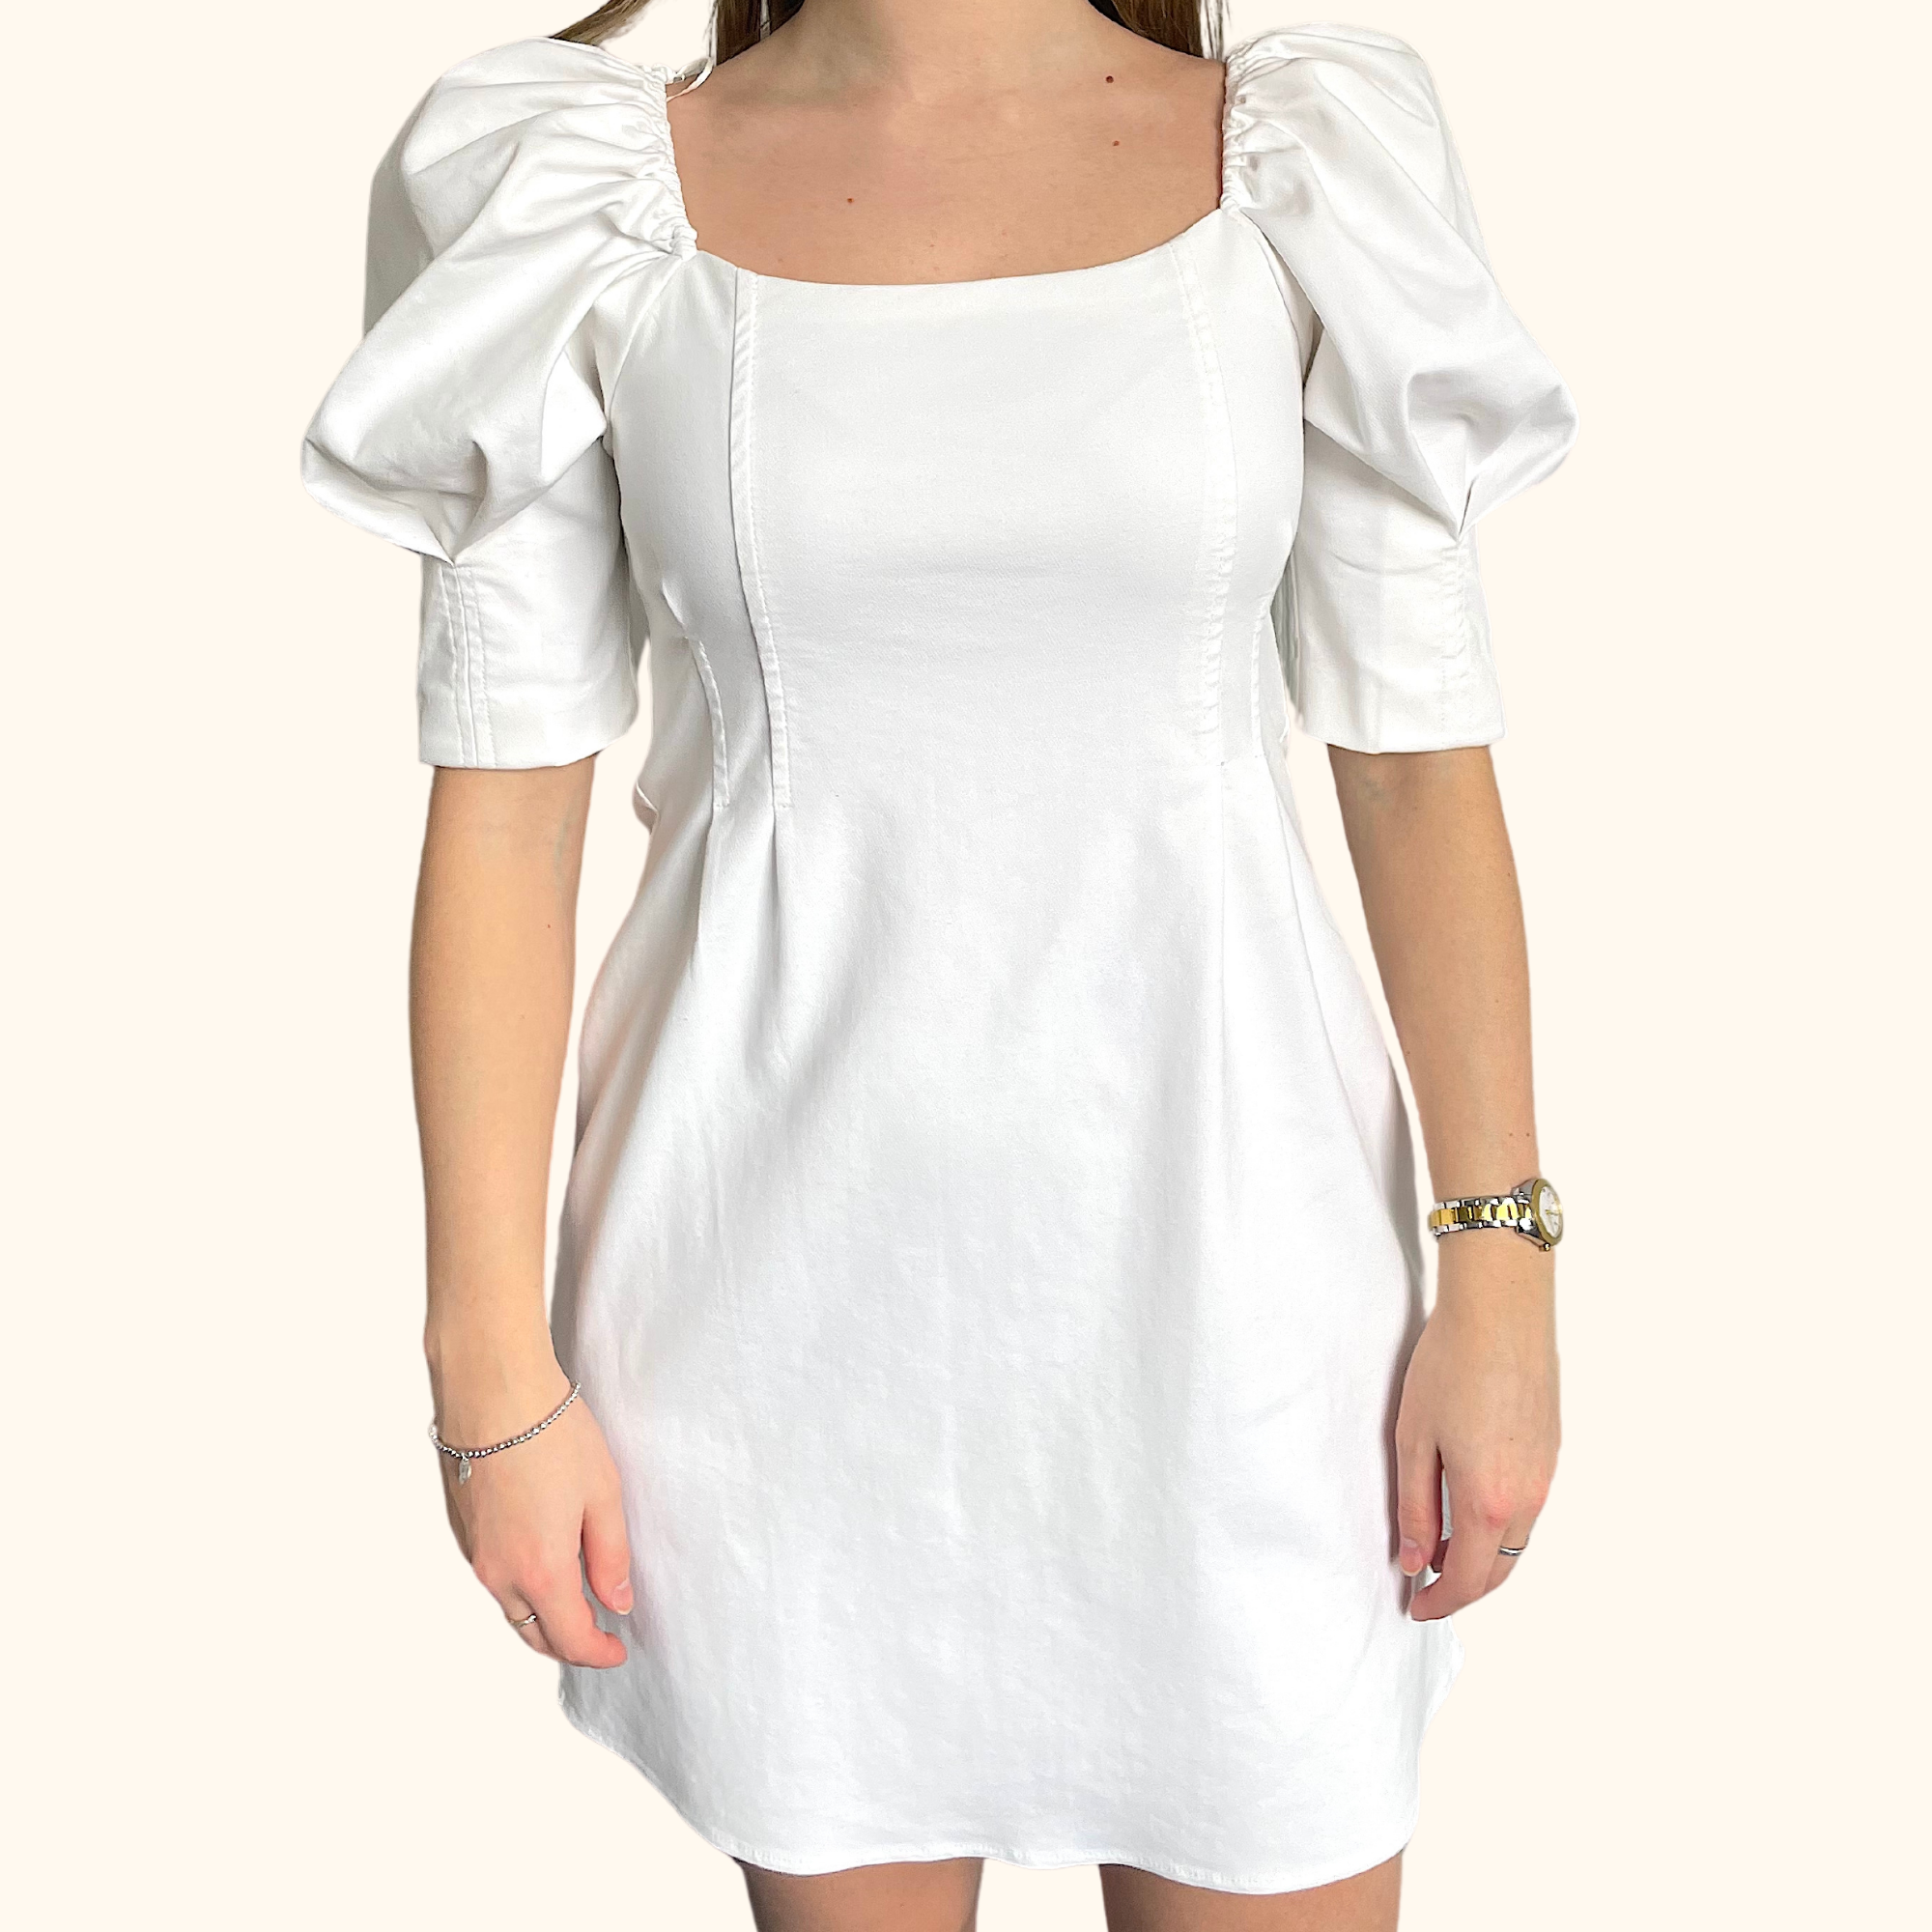 Zara White Denim Puff Sleeve Mini Dress - Size Medium - Zara - Dresses